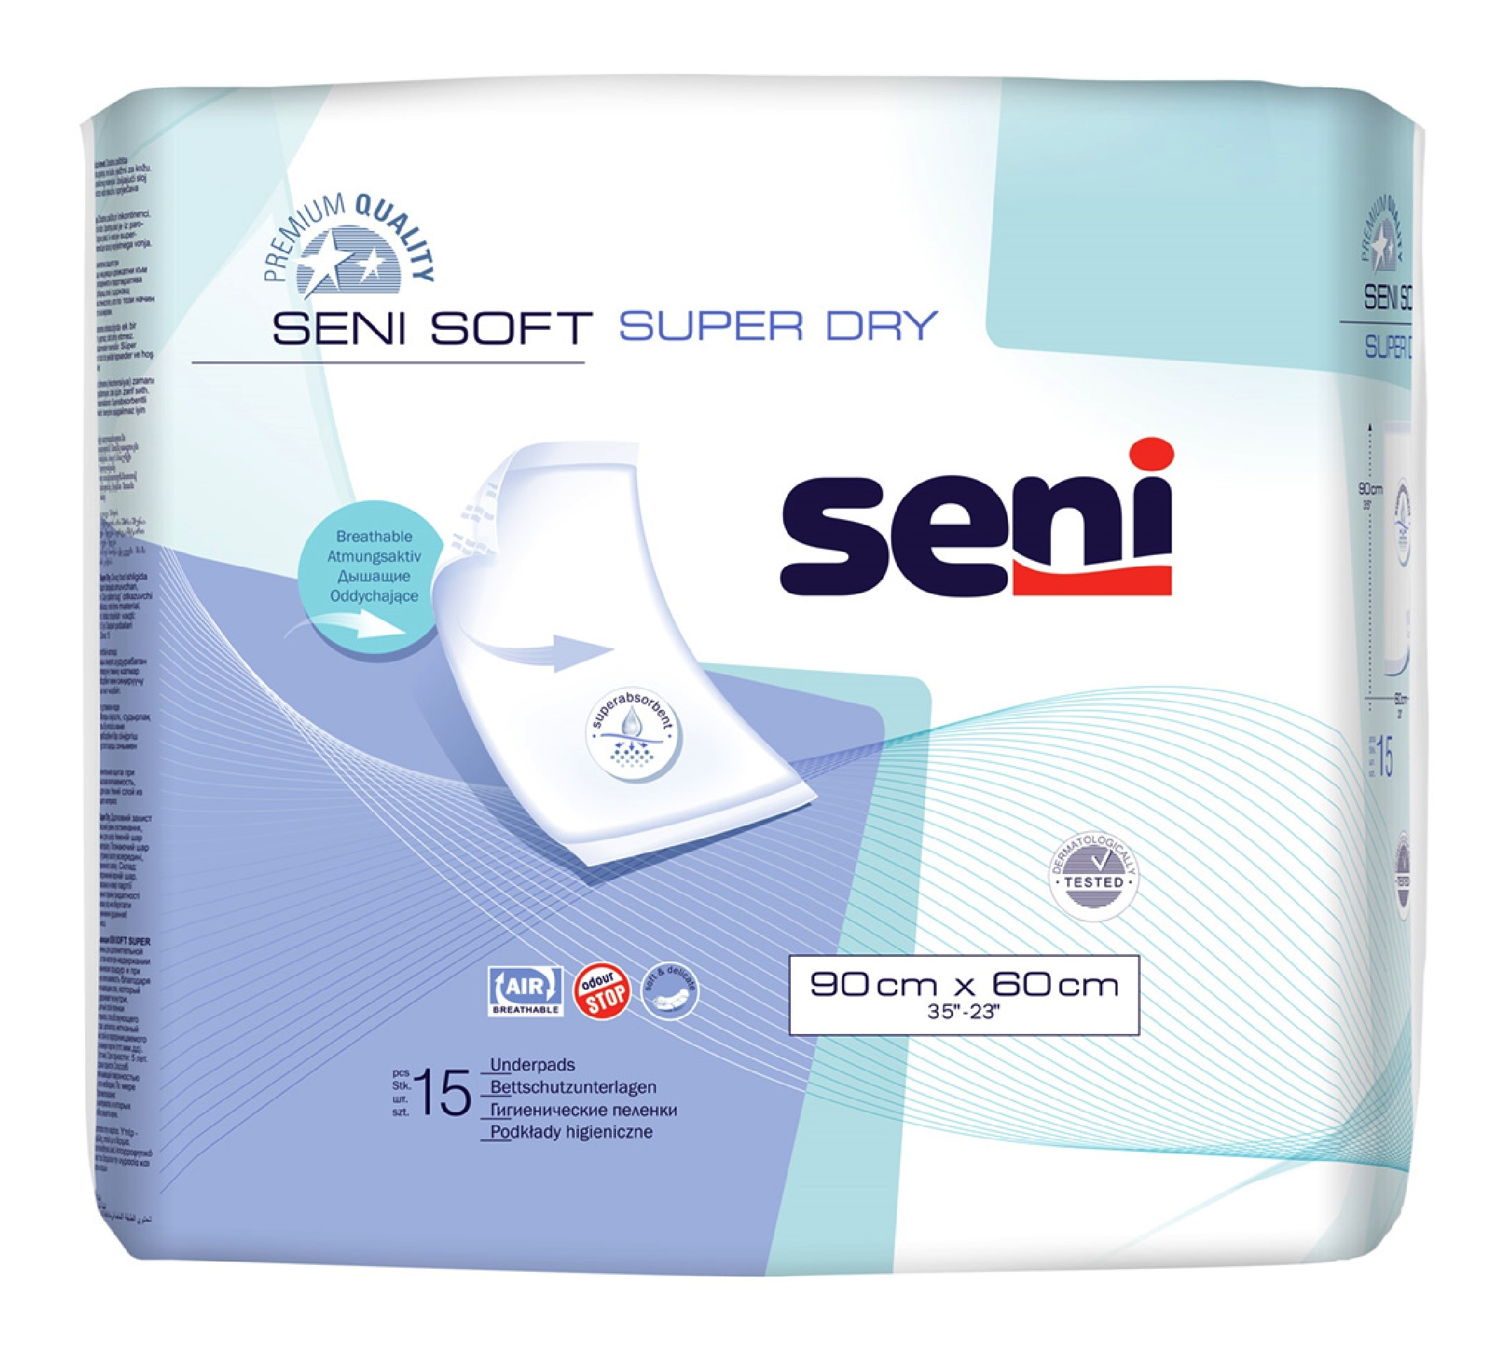 Seni Soft Super Dry 90x60cm